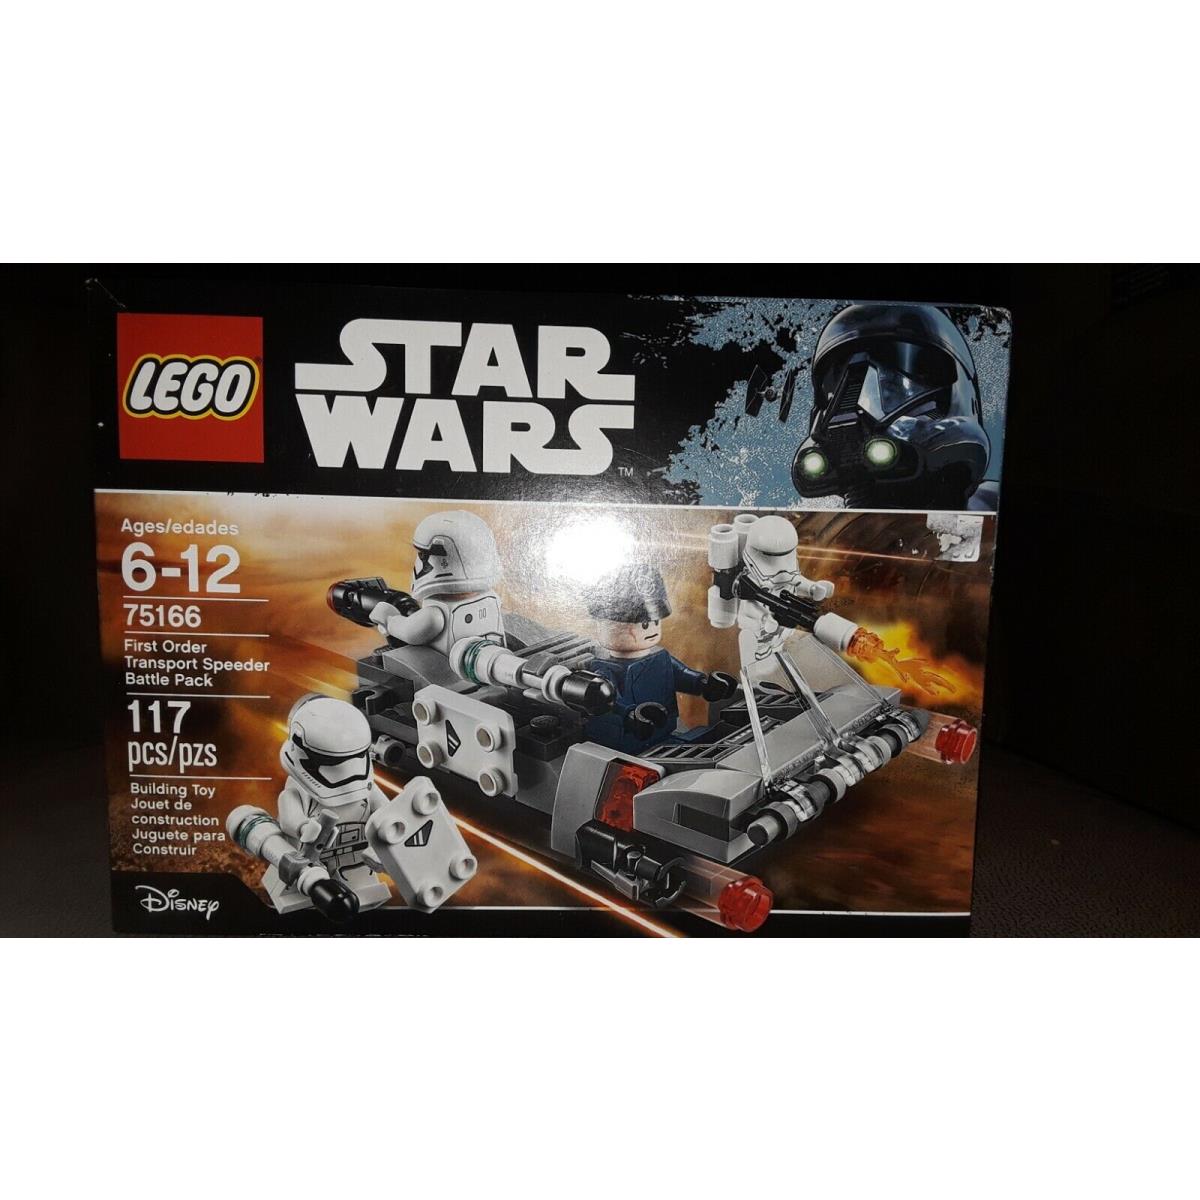 Lego Star Wars 75166 First Order Transport Speeder Battle Pack New/ Sealed/ FS